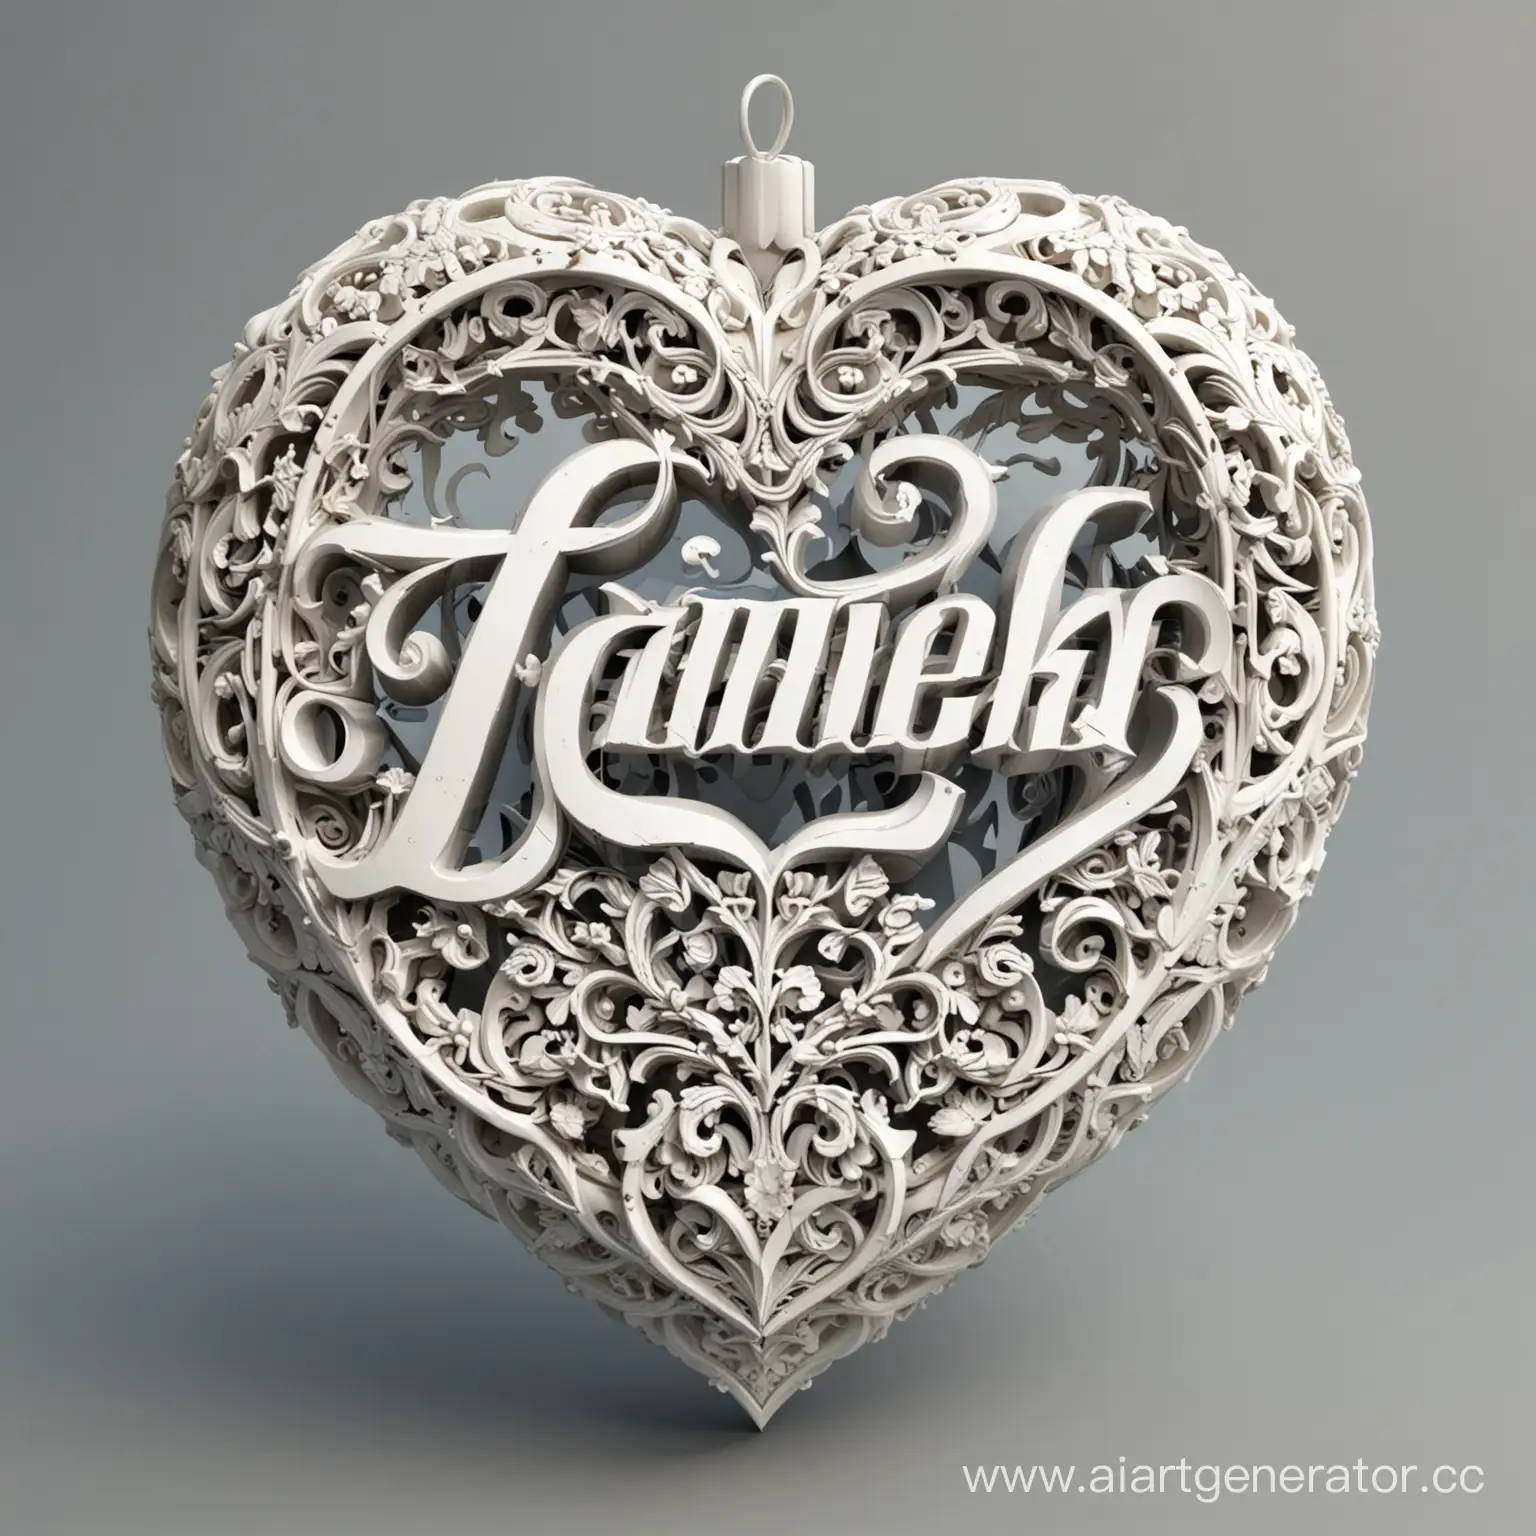 3d графический орнамент с переплетениями в виде кириллической надписи по-русски "ТАНЕЧКА" в форме сердца